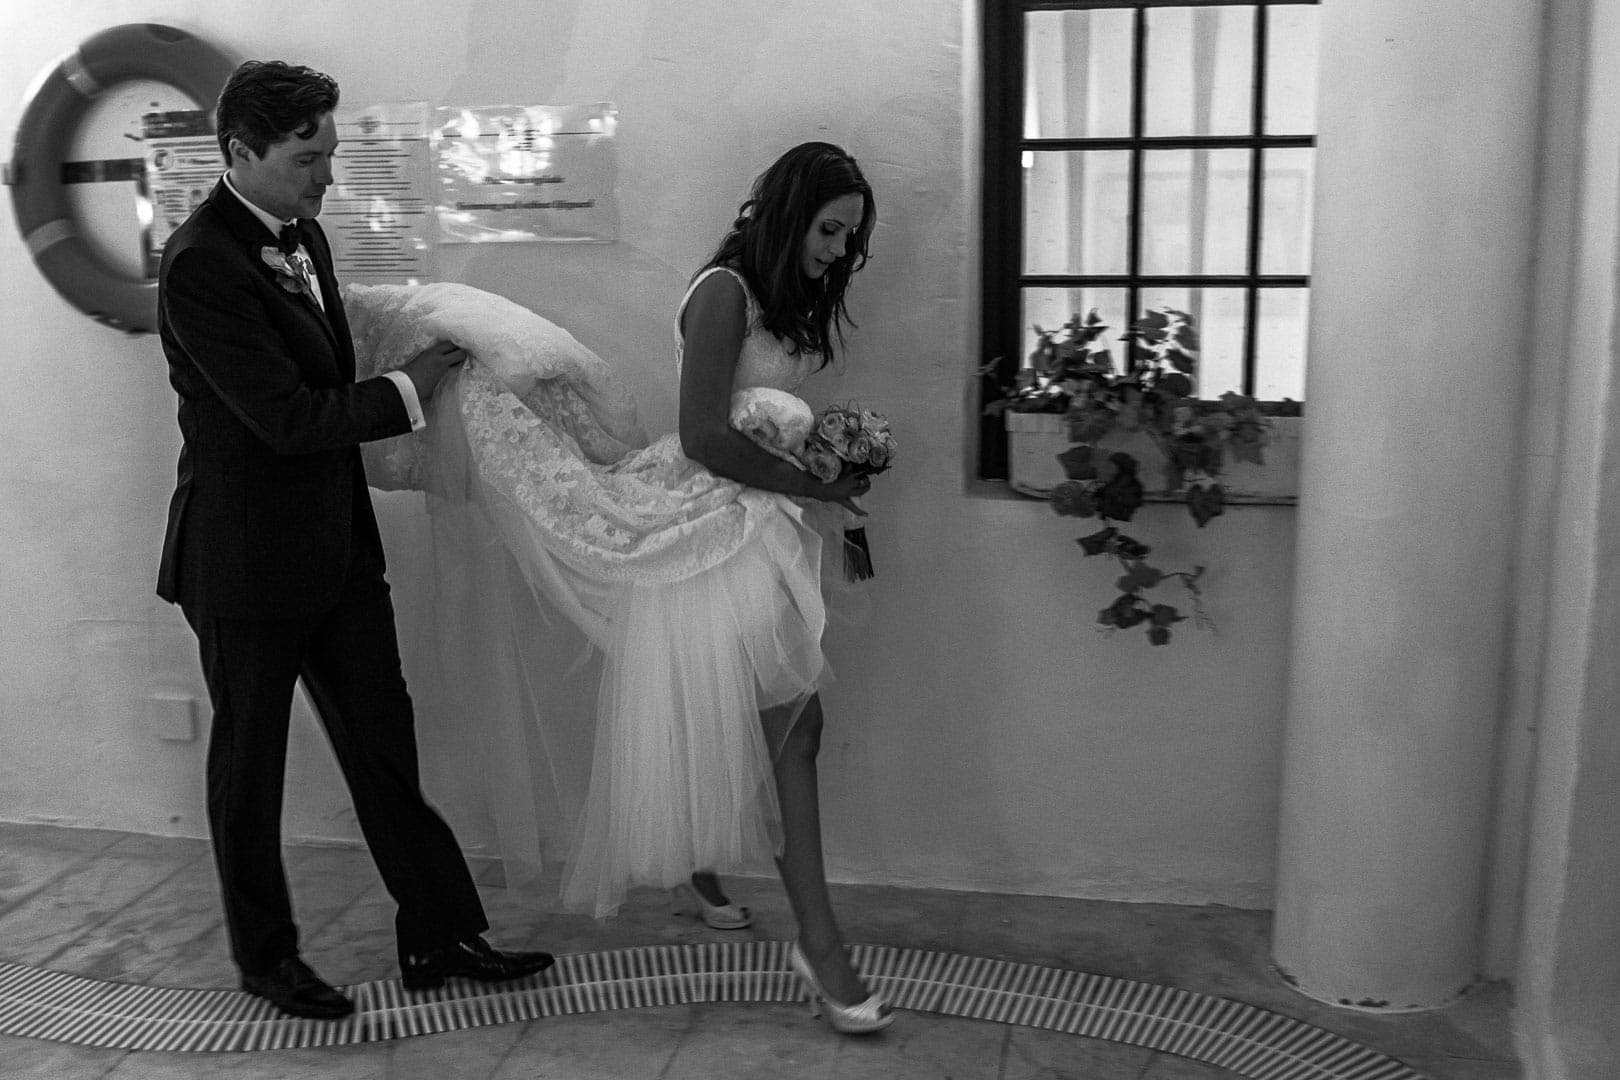 momento complicidad de pareja recien casada caminado en la piscina del hotel na xamena de ibiza.fotografia bea bermejo photographer ibiza 2020